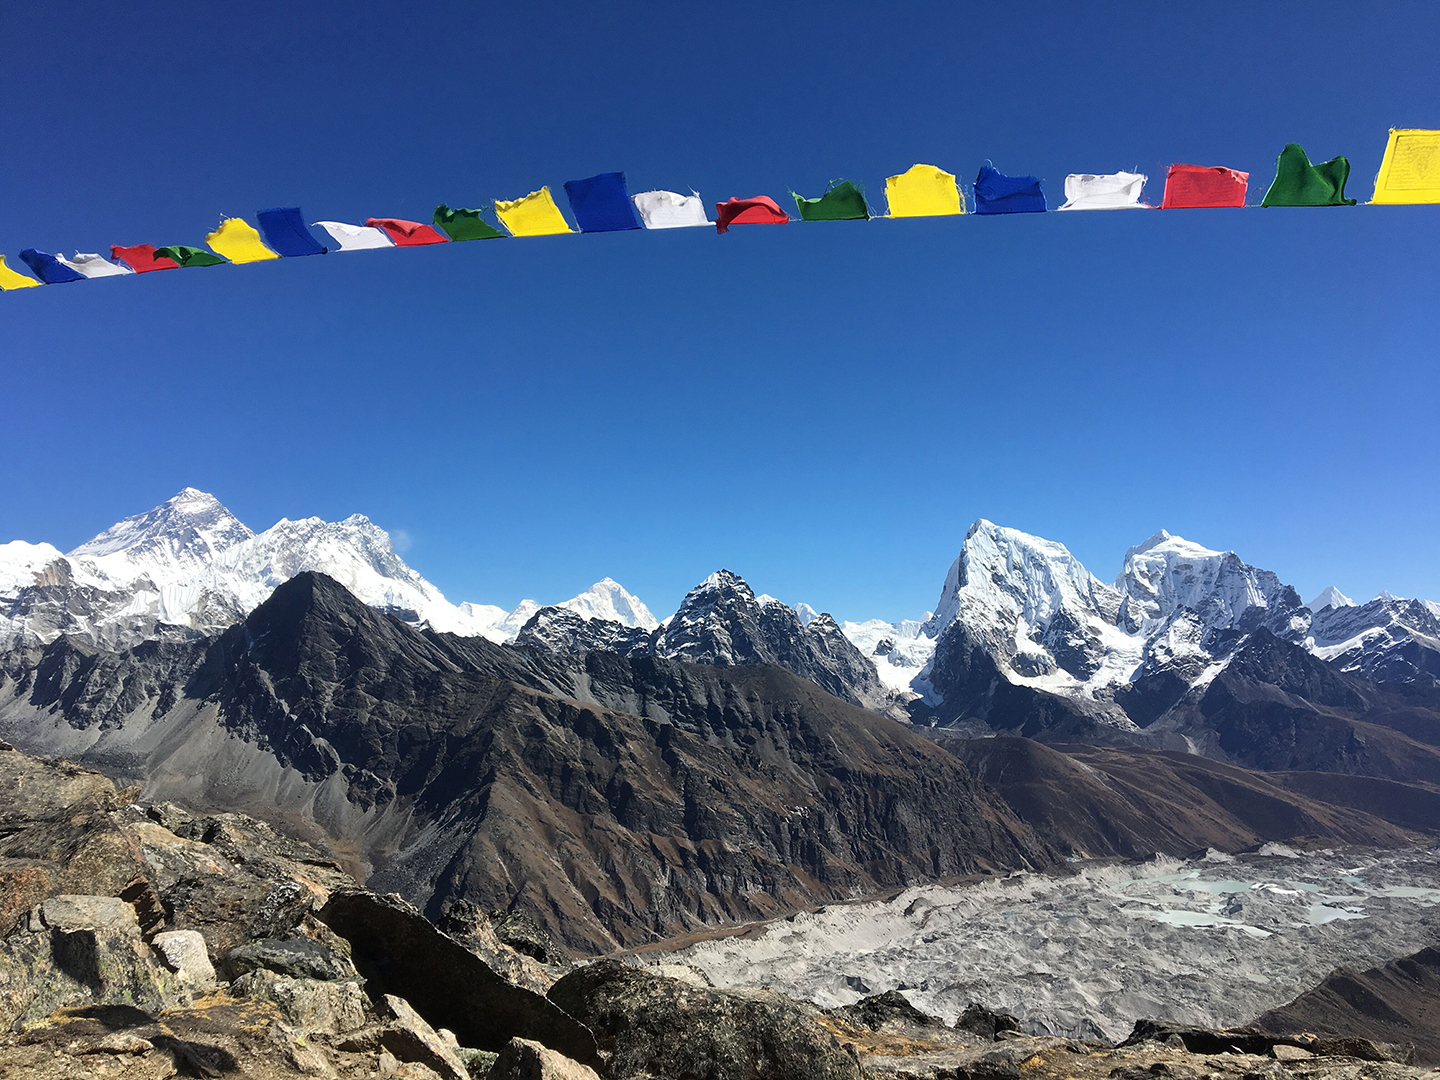 View of Everest, Cholatse and surrounding peaks from Gokyo Ri.